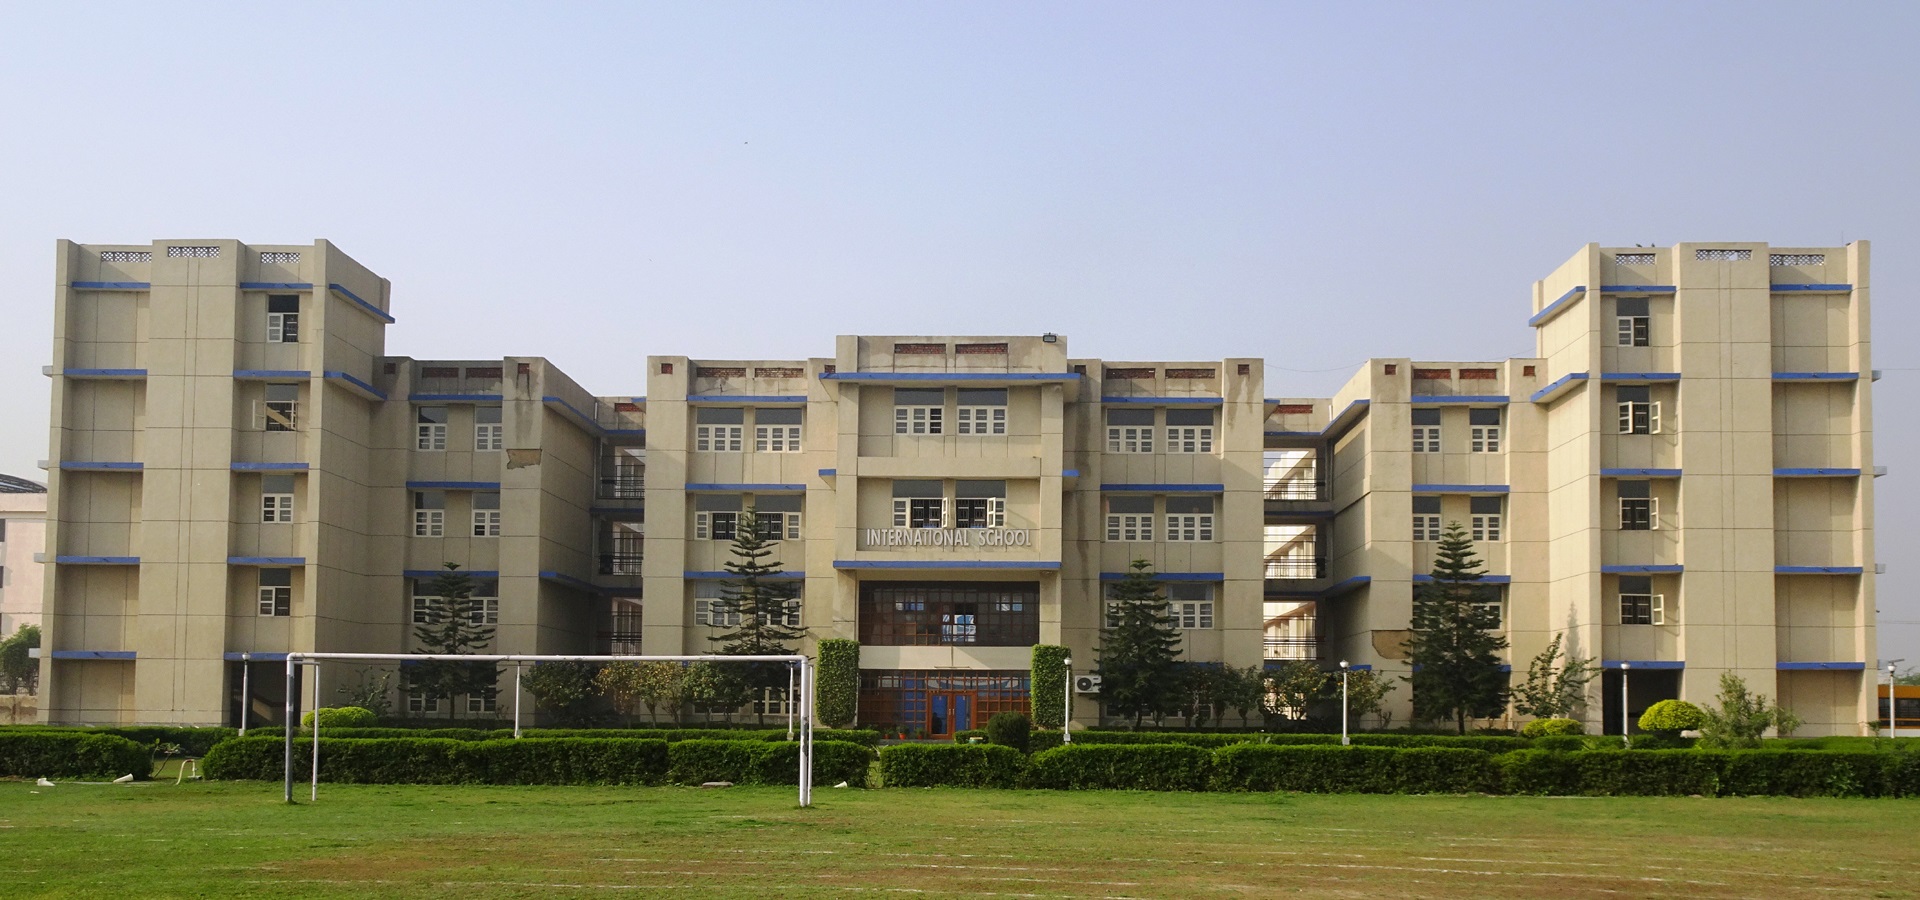 noida college of engineering